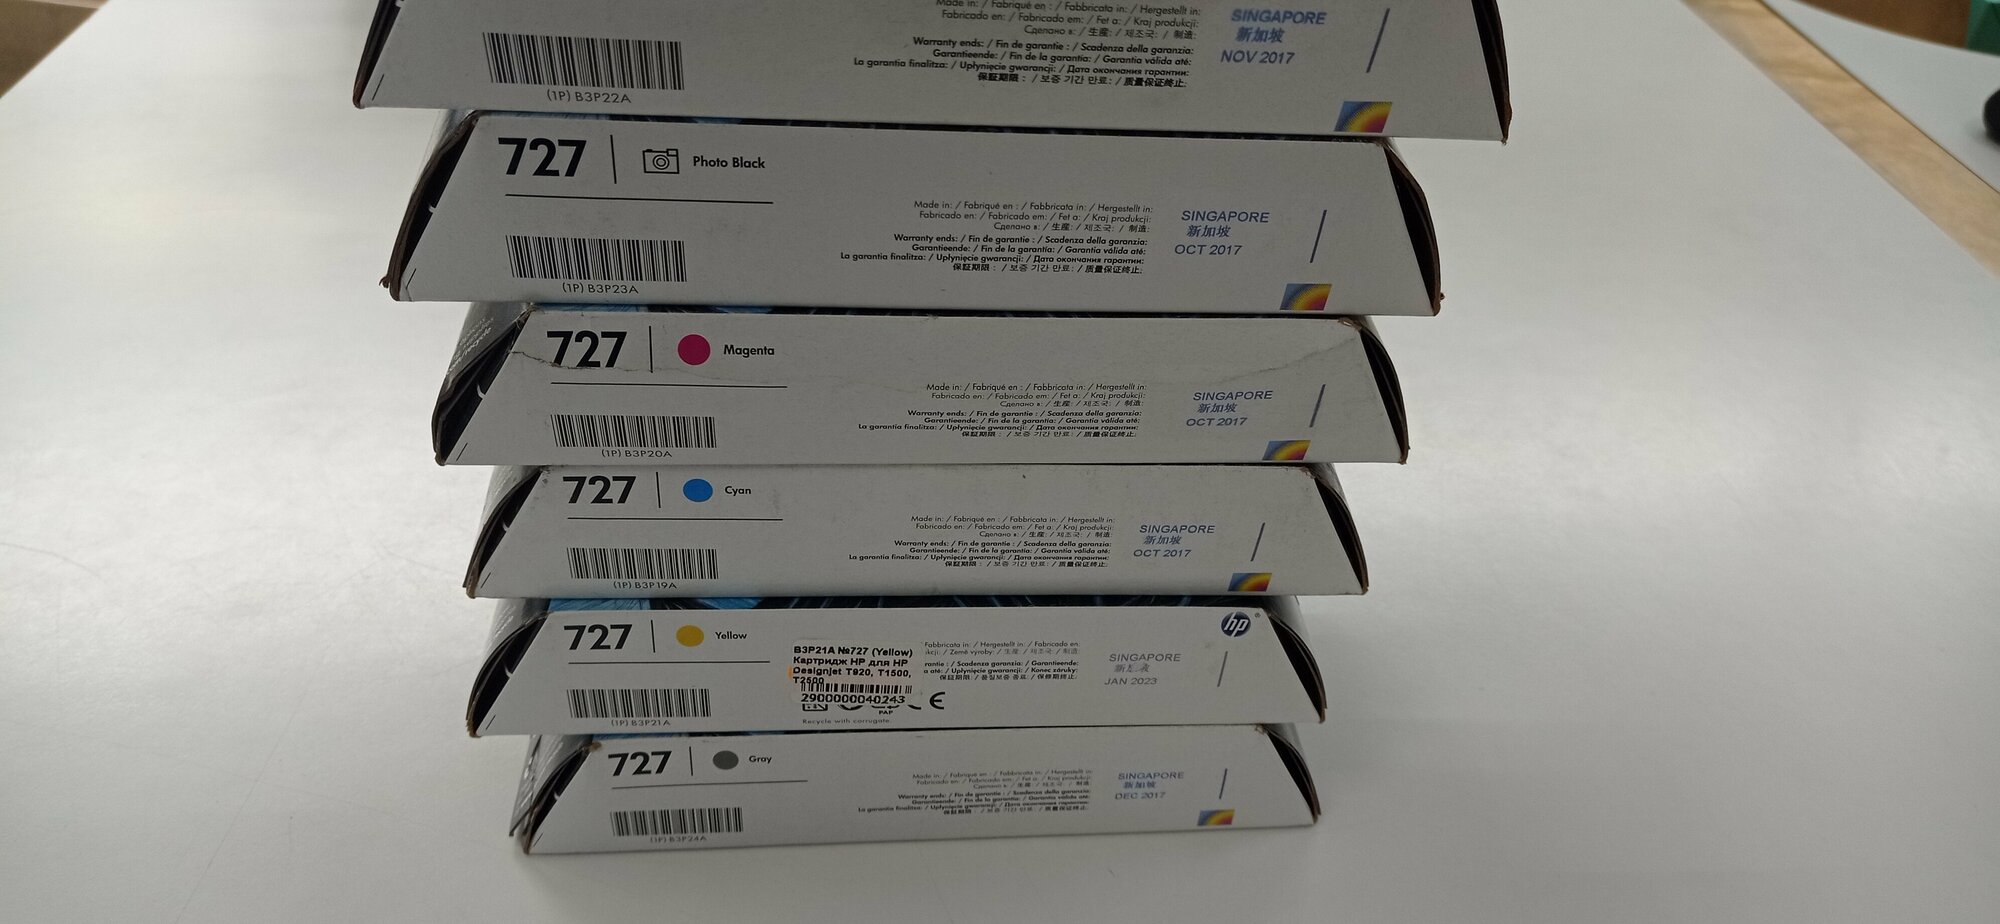 Набор картриджей комплект HP 727 bk/c/m/y/mbk/gy (B3p19.20.21.22.23.24) 2017 год.